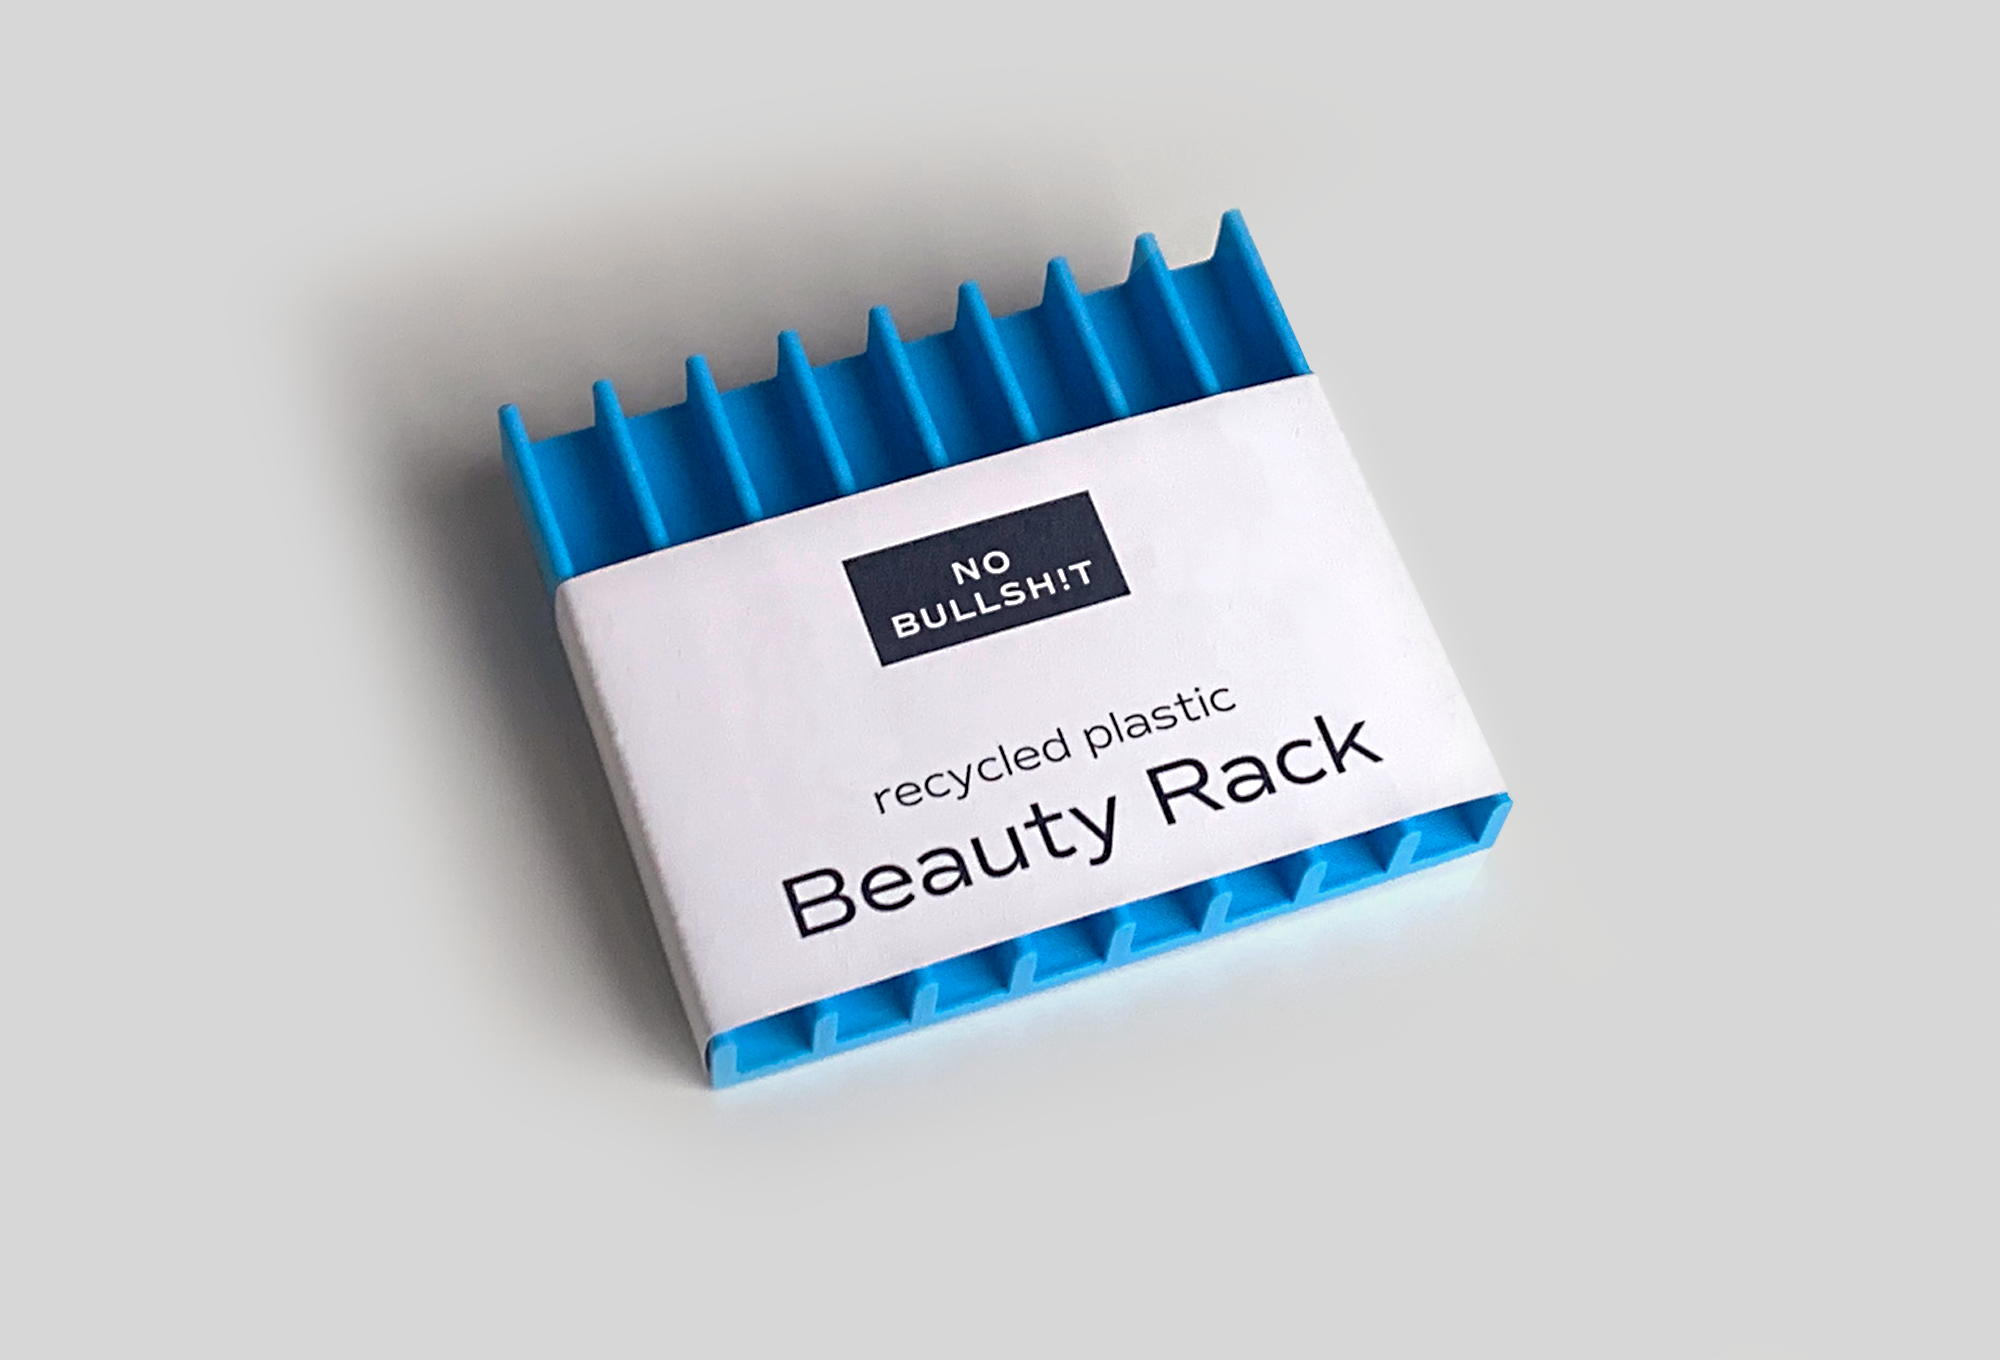 Beauty Rack